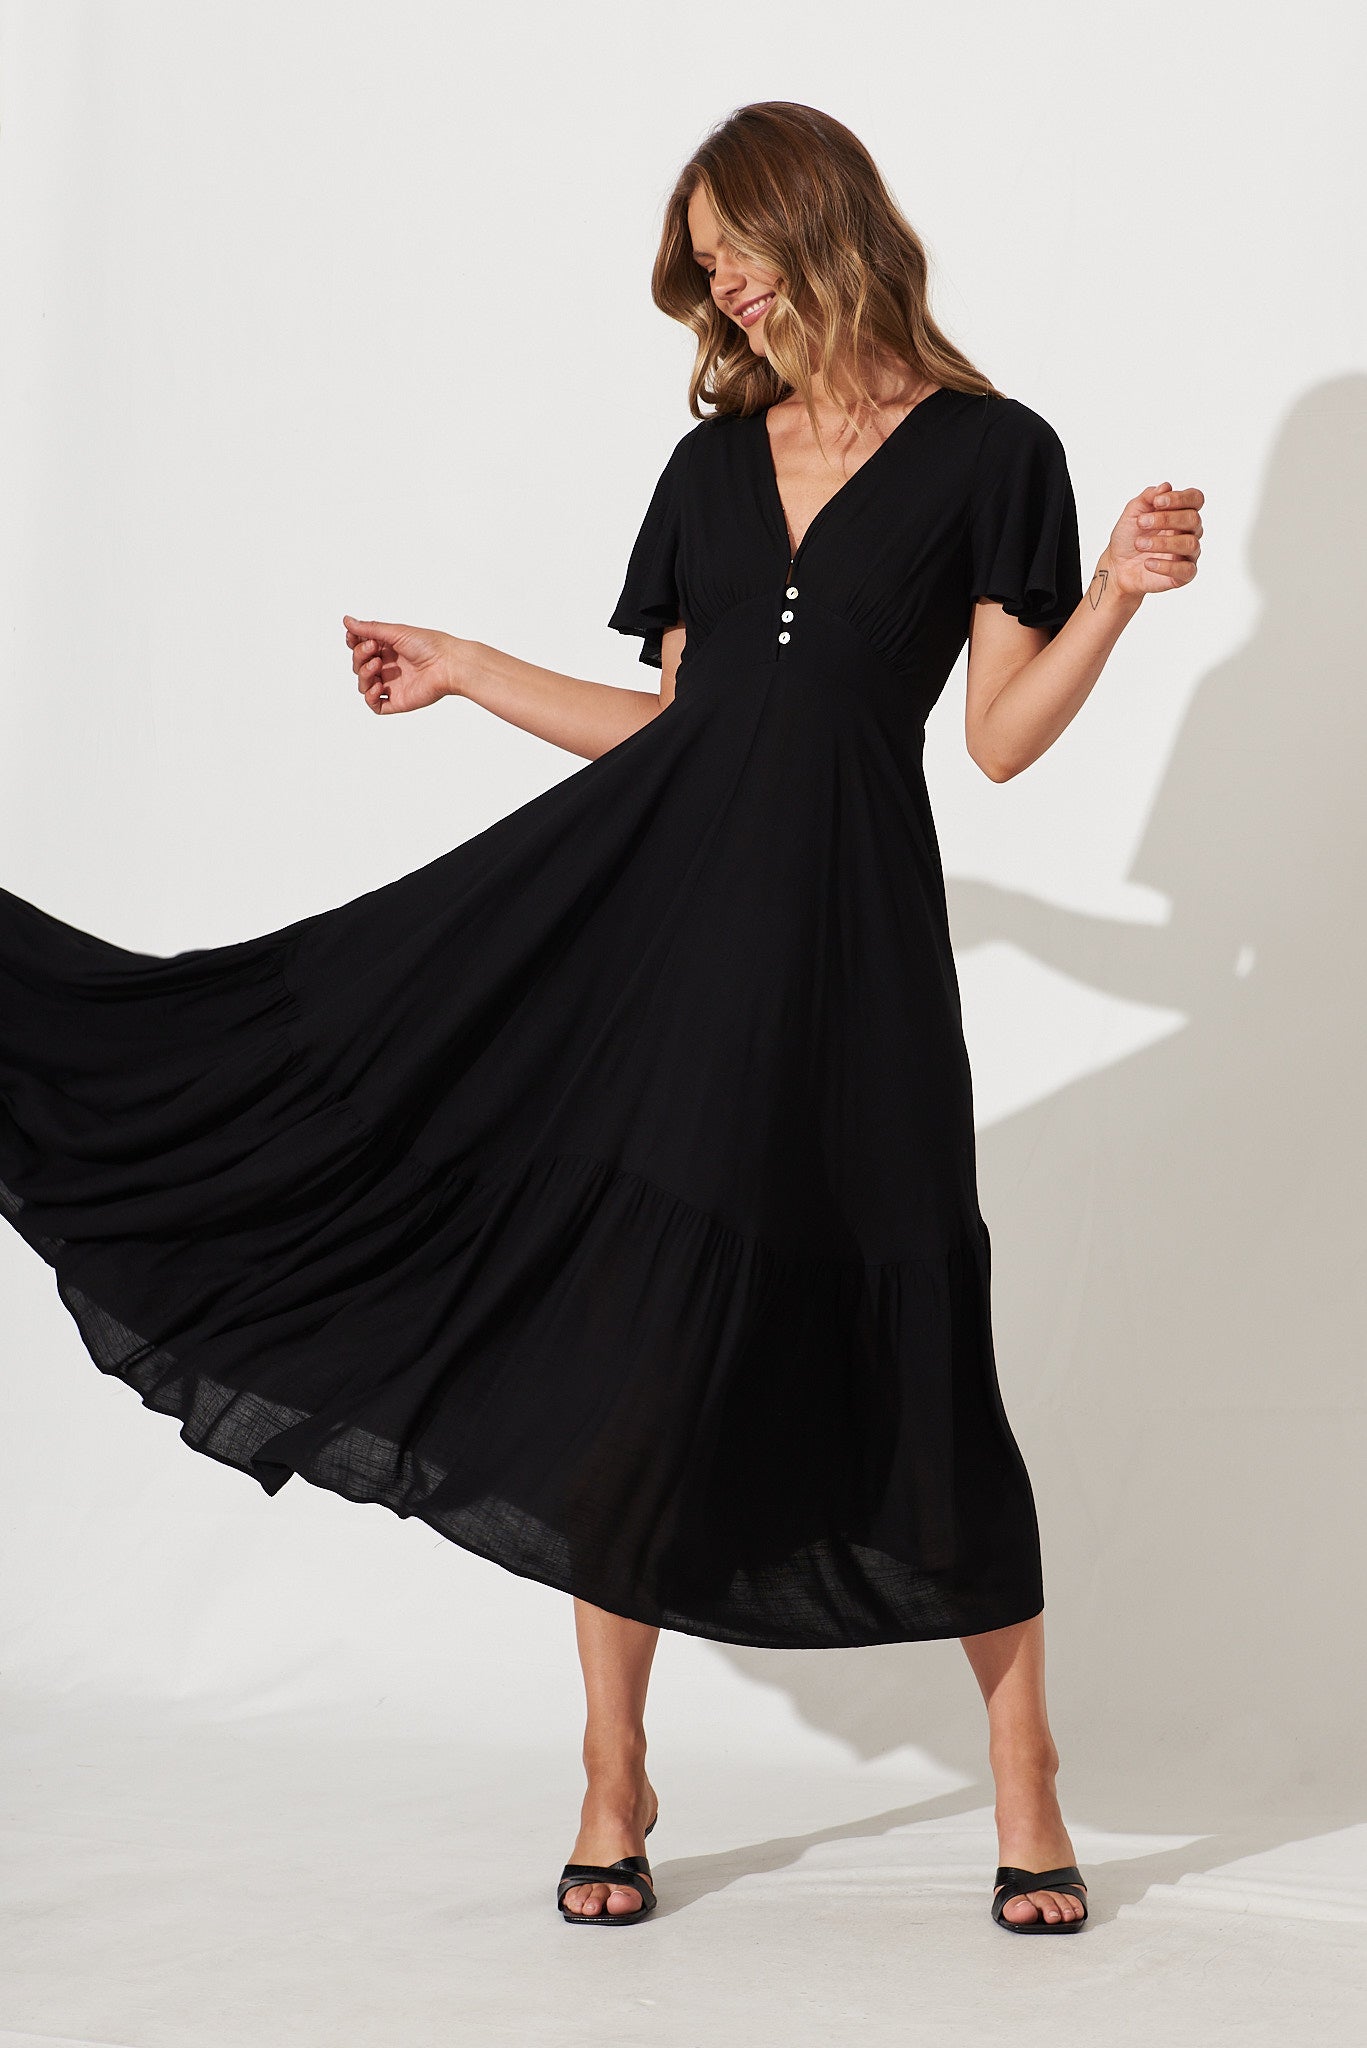 Nevada Maxi Dress In Black - full length